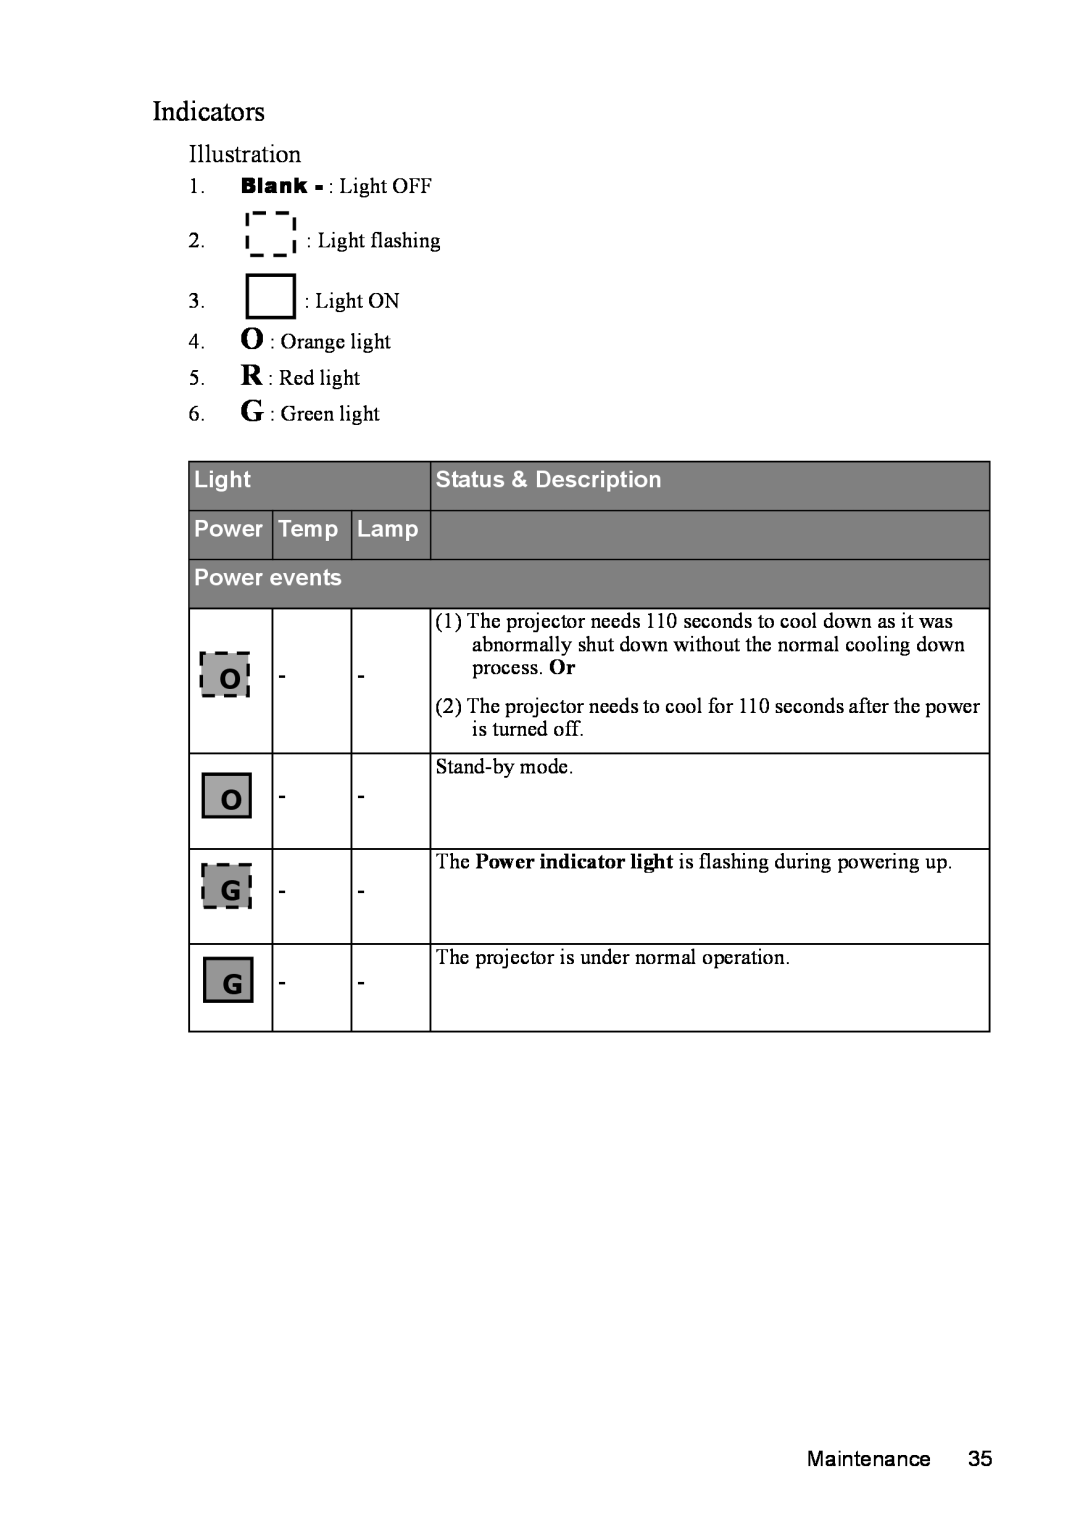 Mitsubishi Electronics SE2U user manual Indicators, Light, Status & Description, Temp, Lamp, Power events 